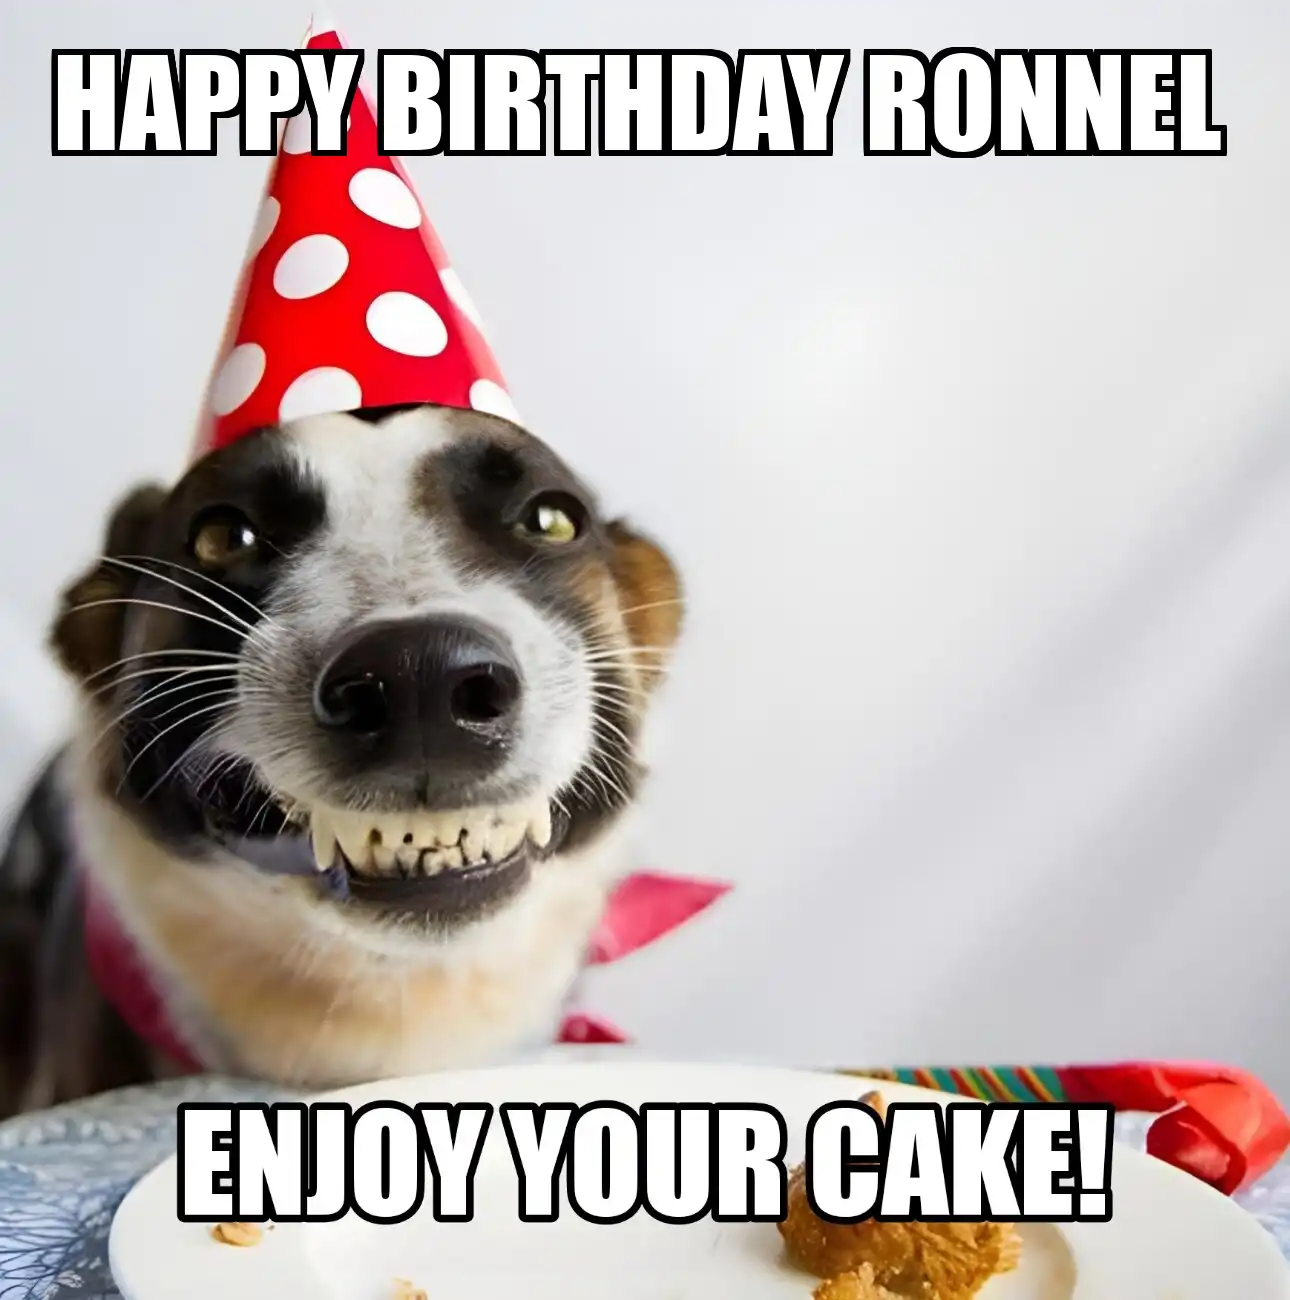 Happy Birthday Ronnel Enjoy Your Cake Dog Meme